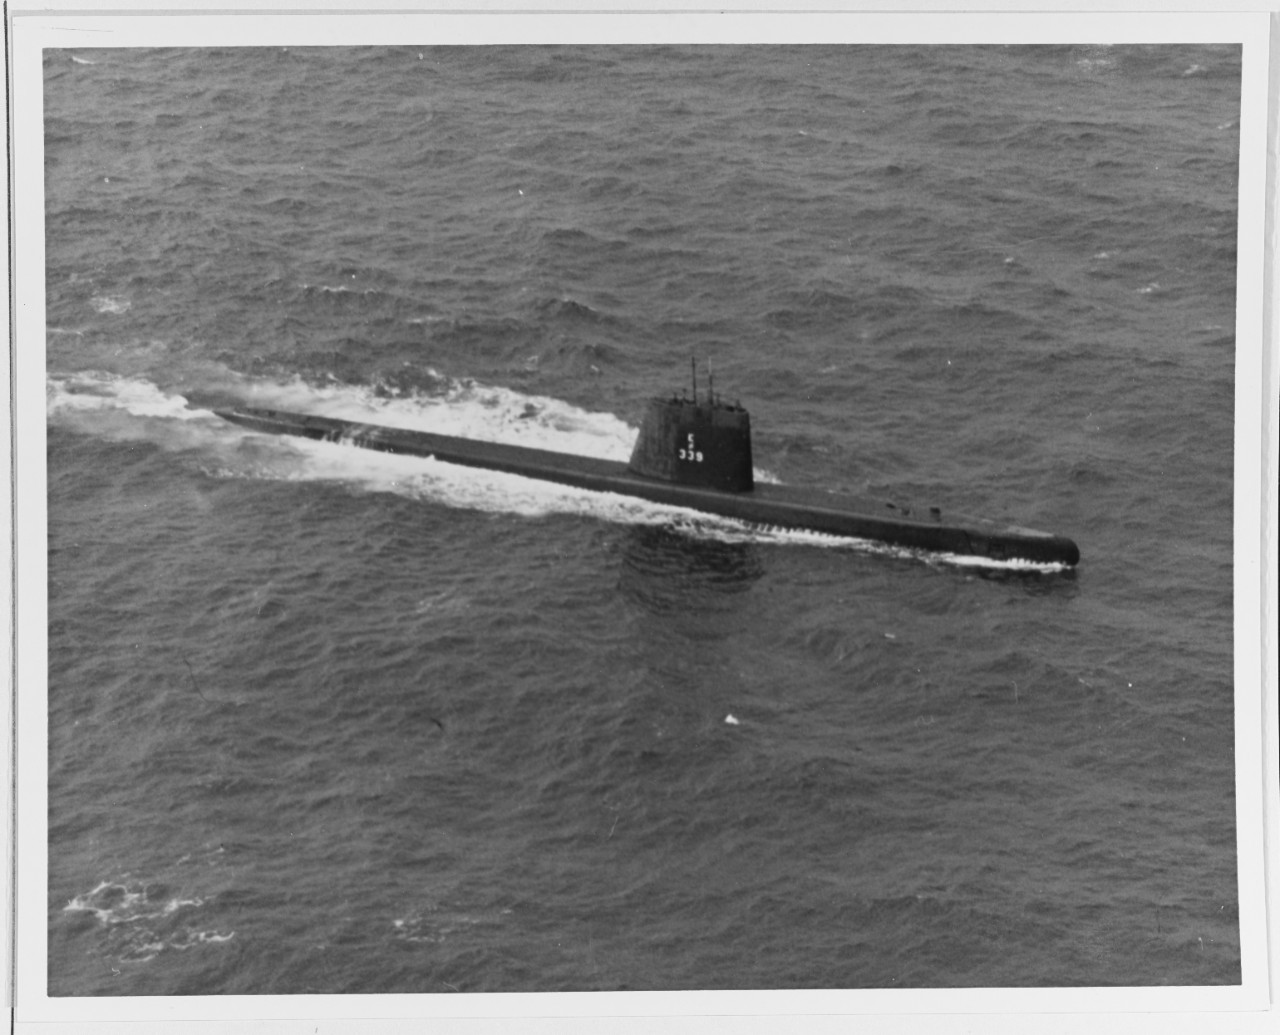 USS CATFISH (SS-339)